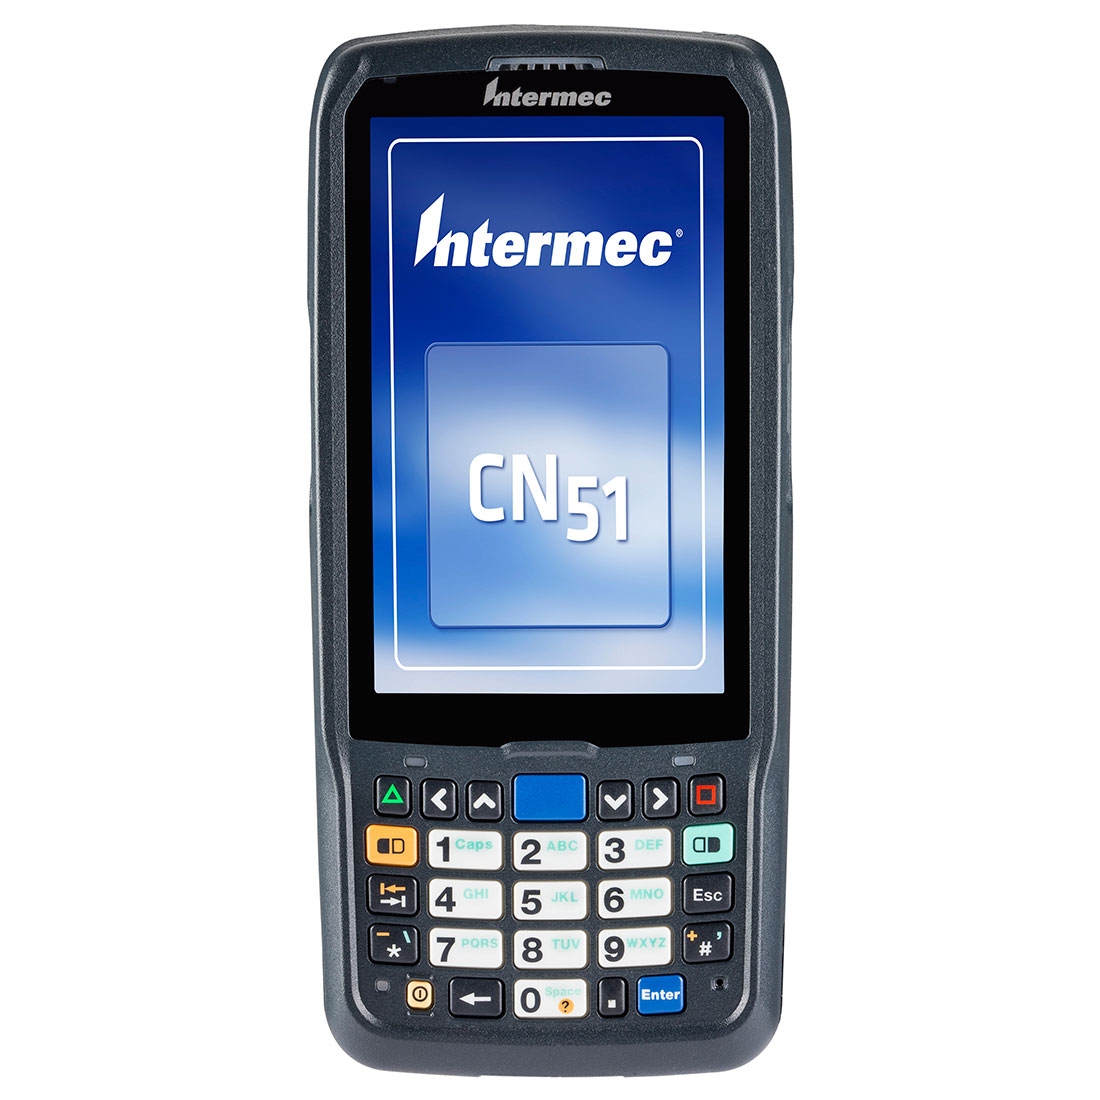 intermec-cn51-mobile-computer.